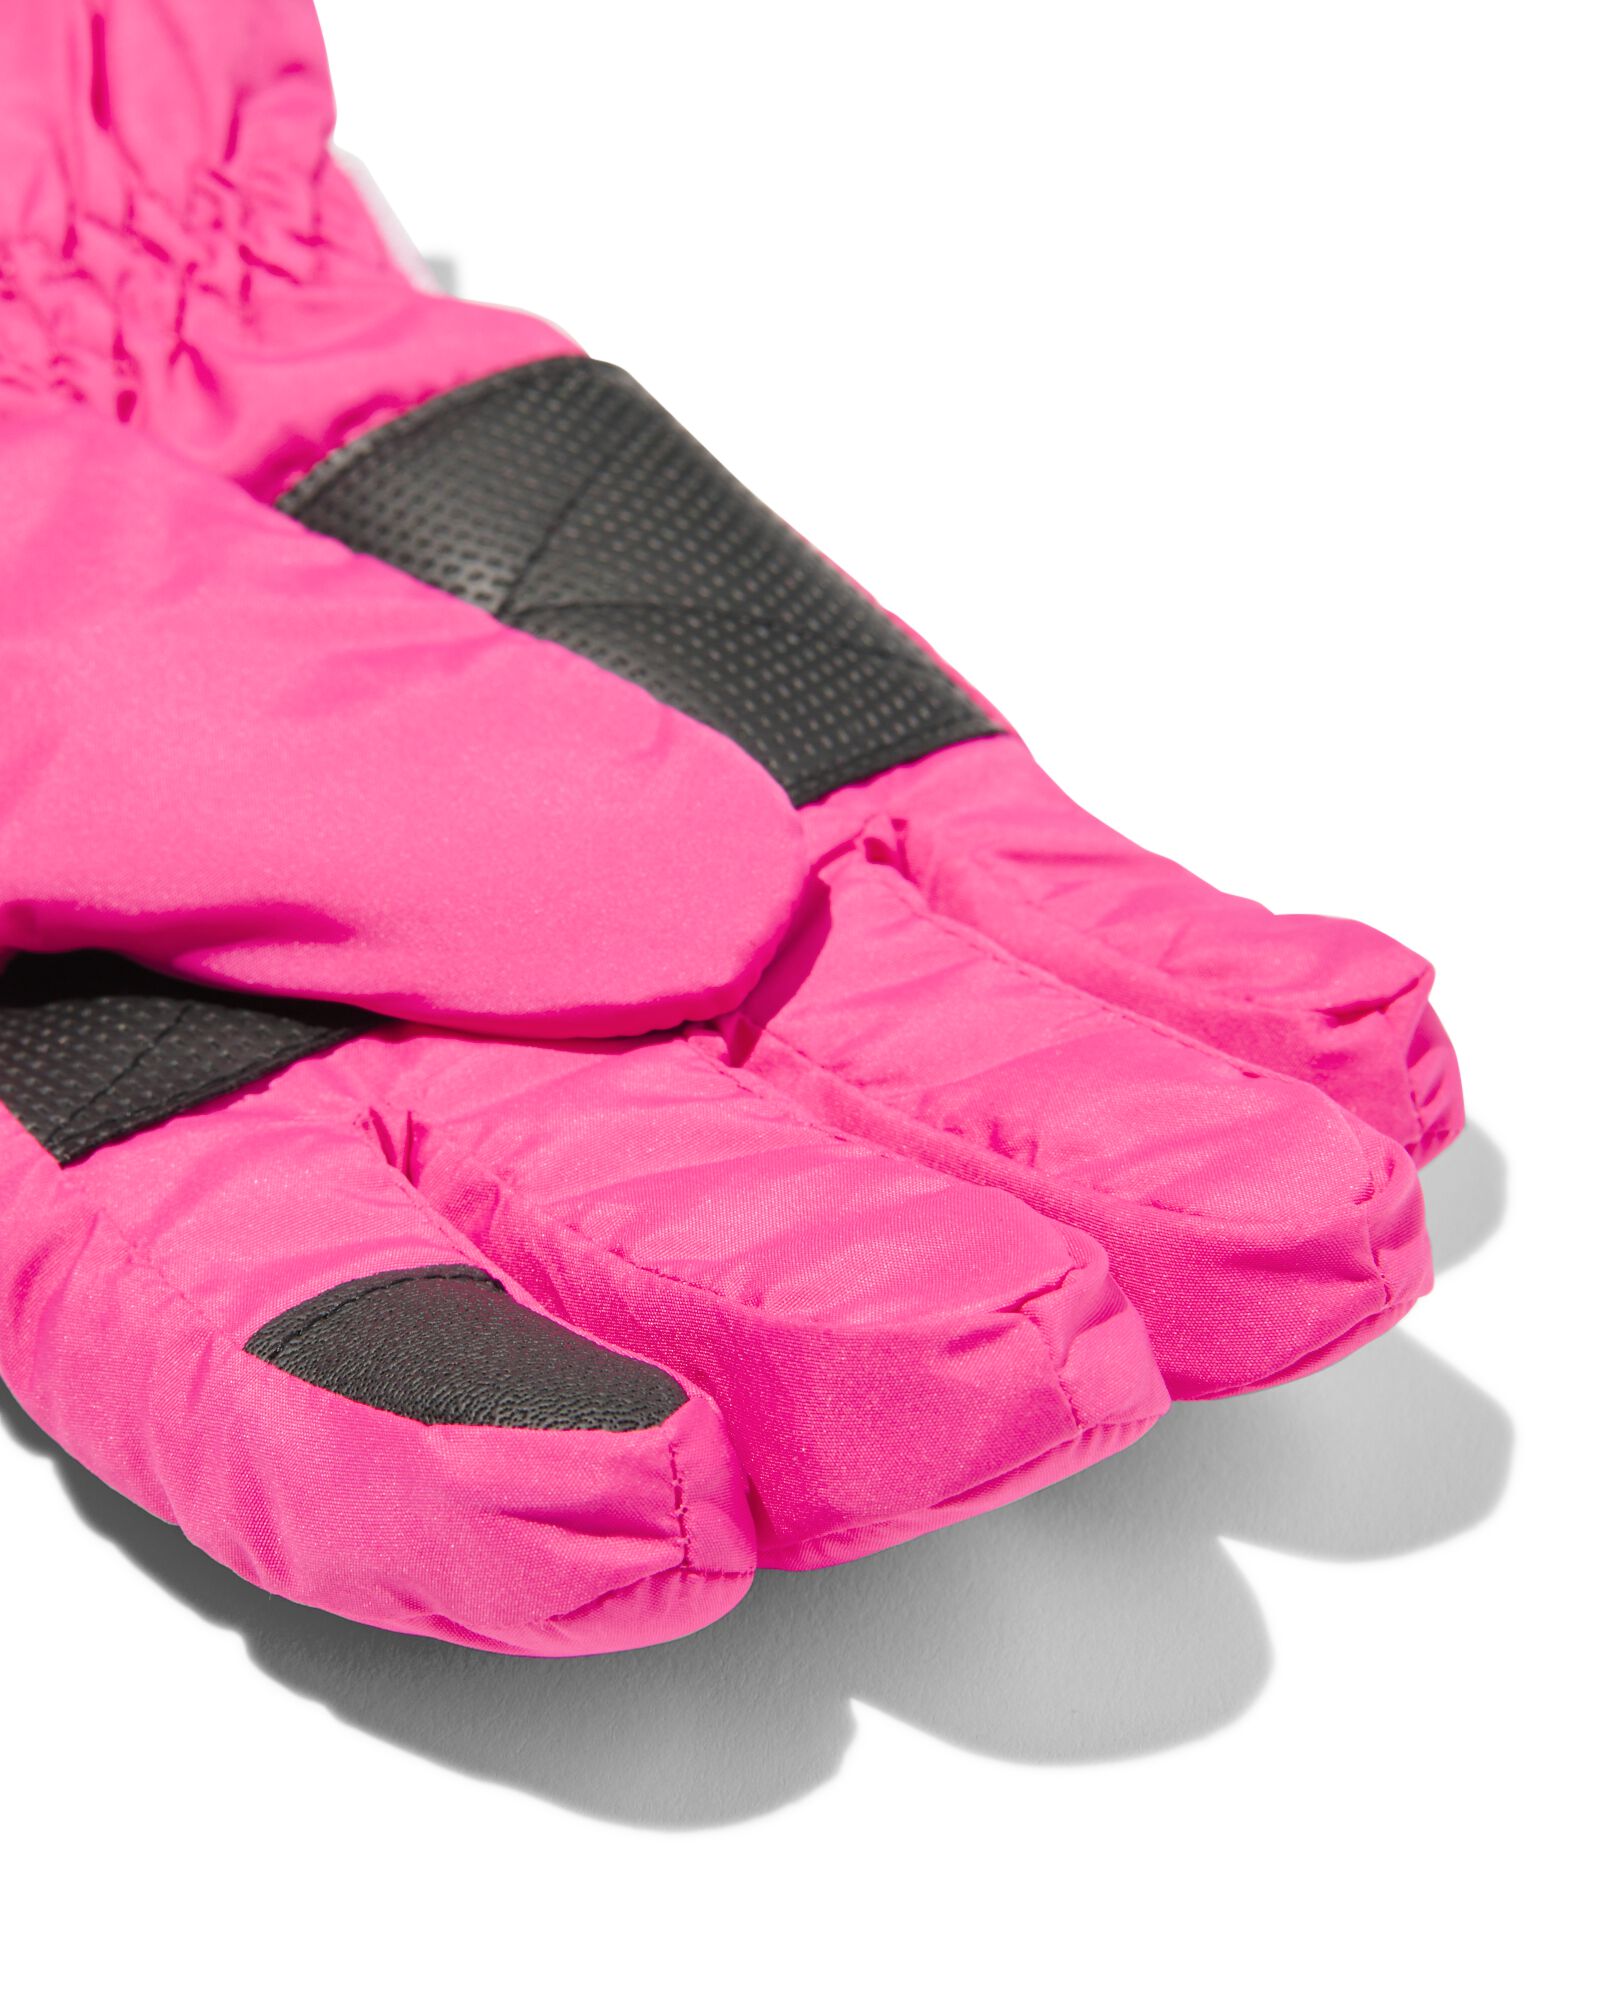 gants enfant imperméable écran tactile rose rose - 16736230PINK - HEMA